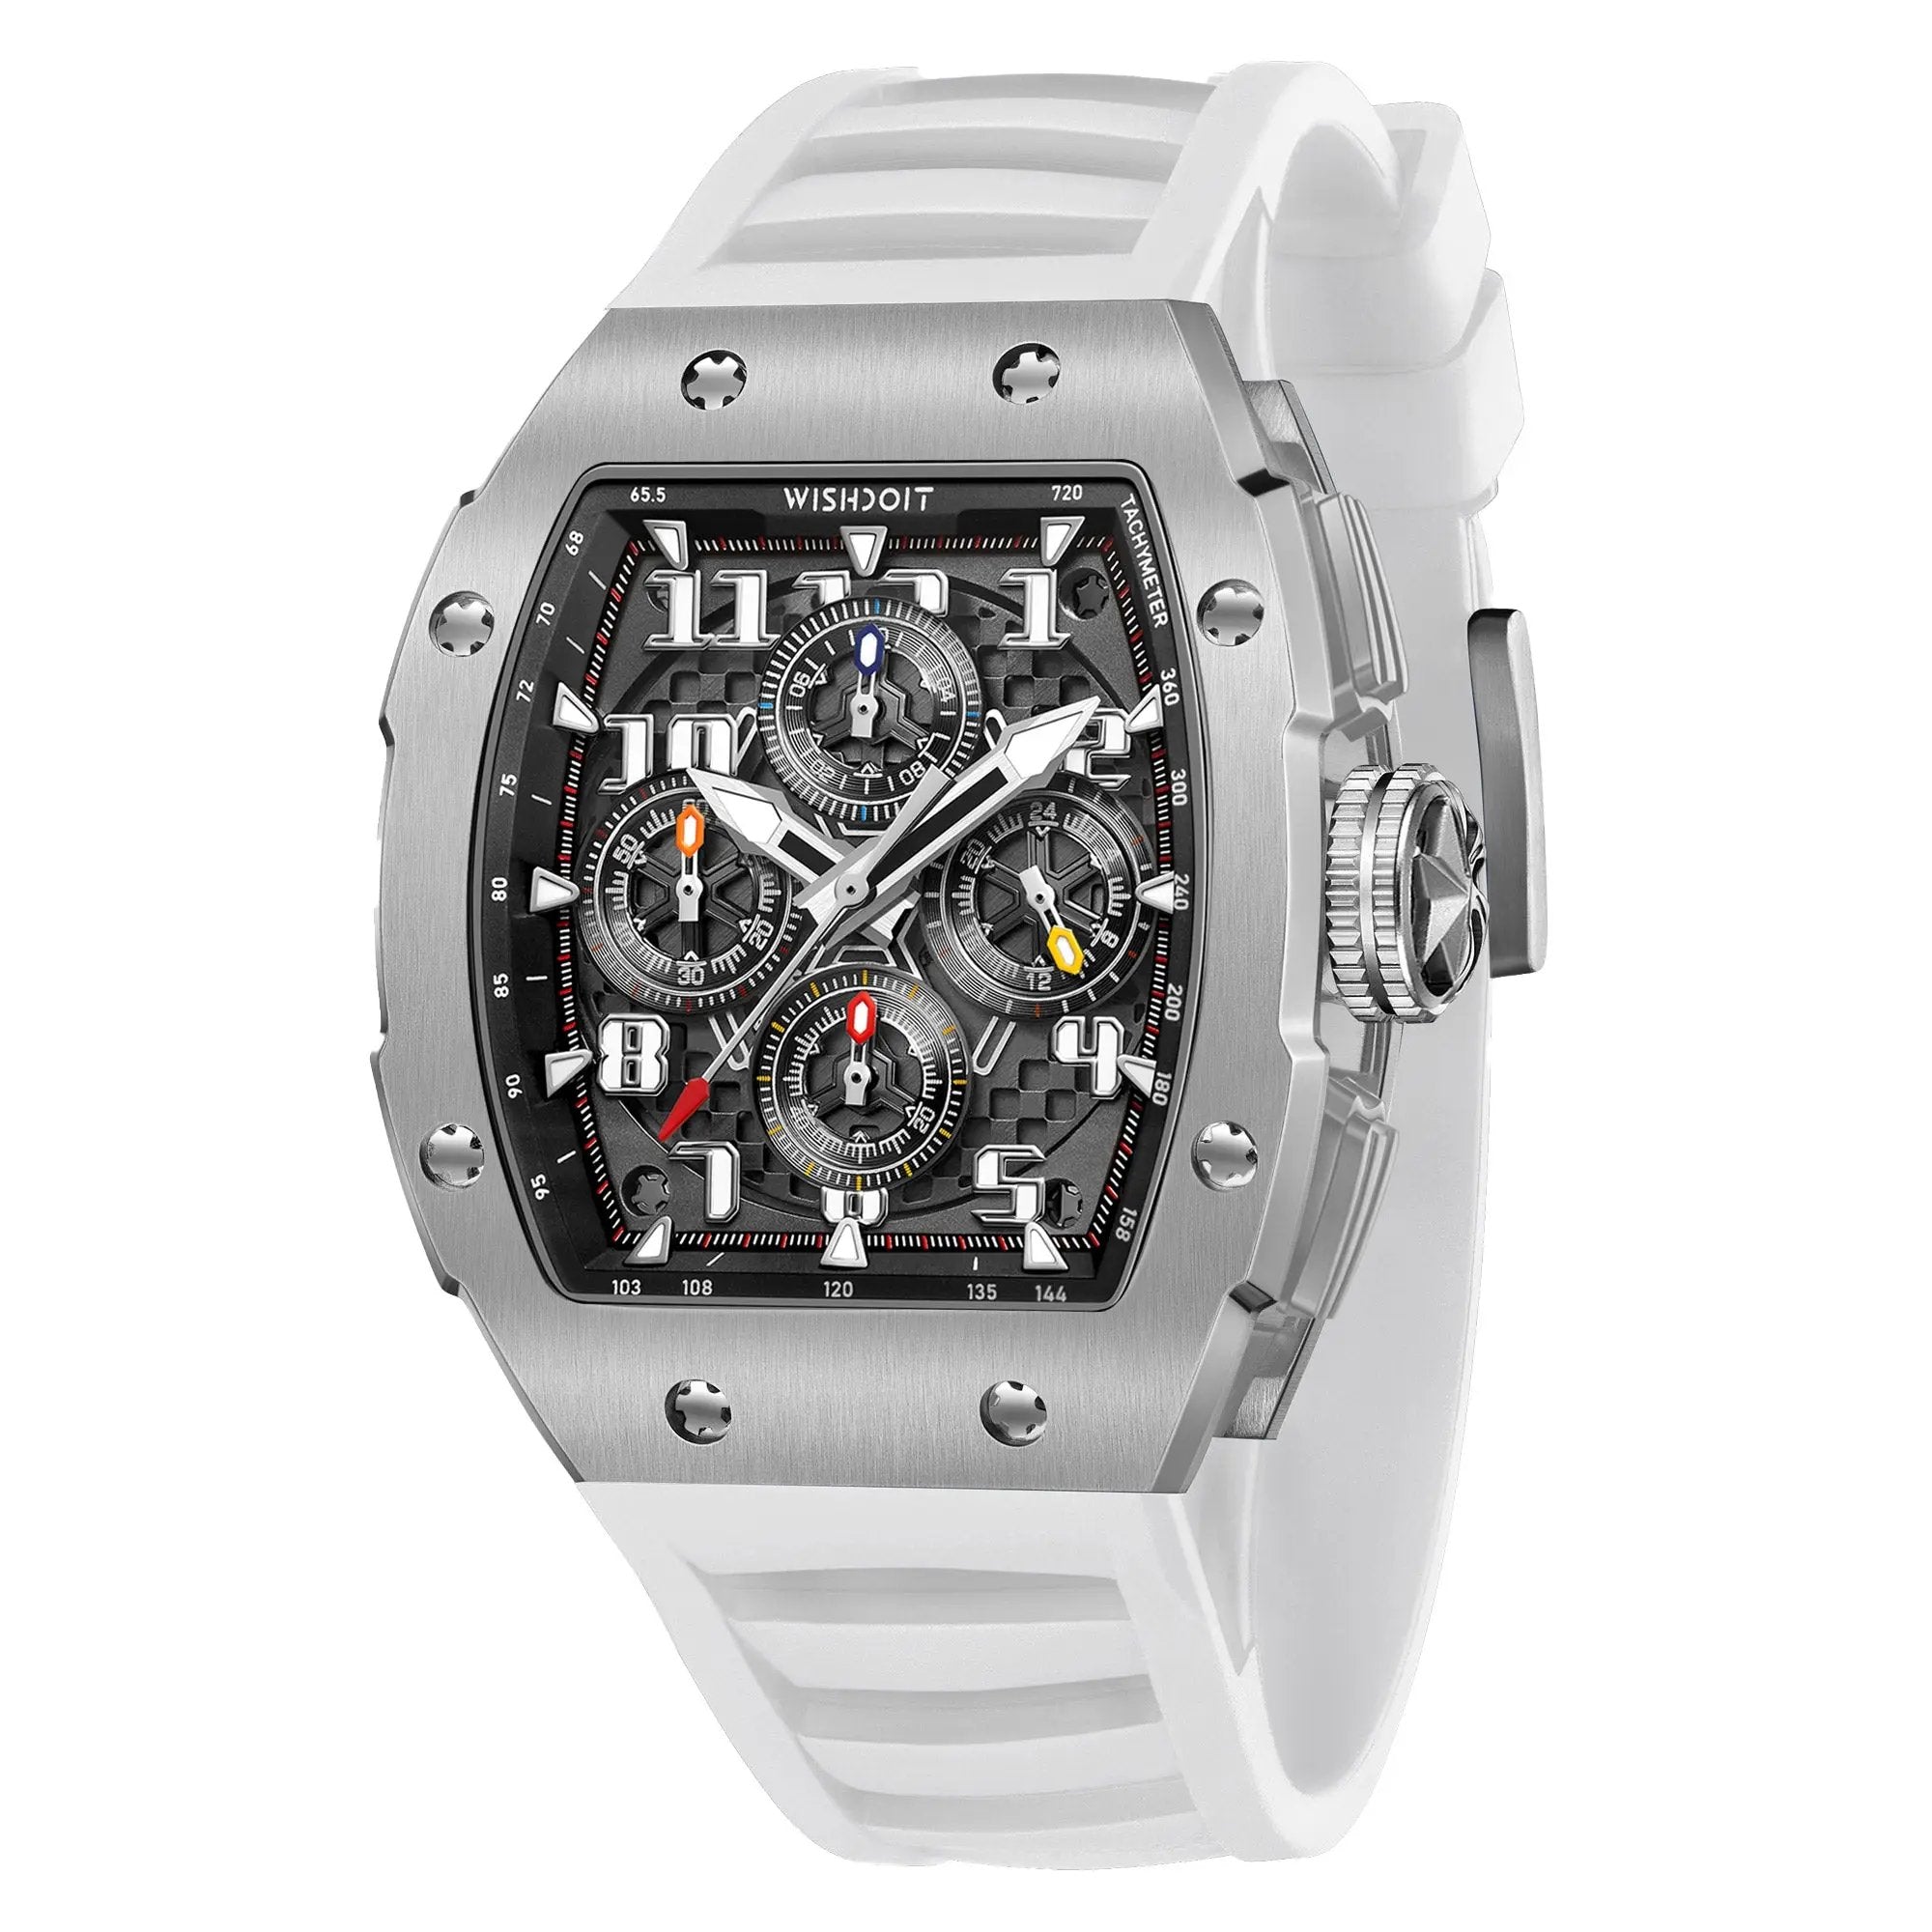 Racing GT 2.0 Chronograph Quartz Watch - White | Wishdoit Watches